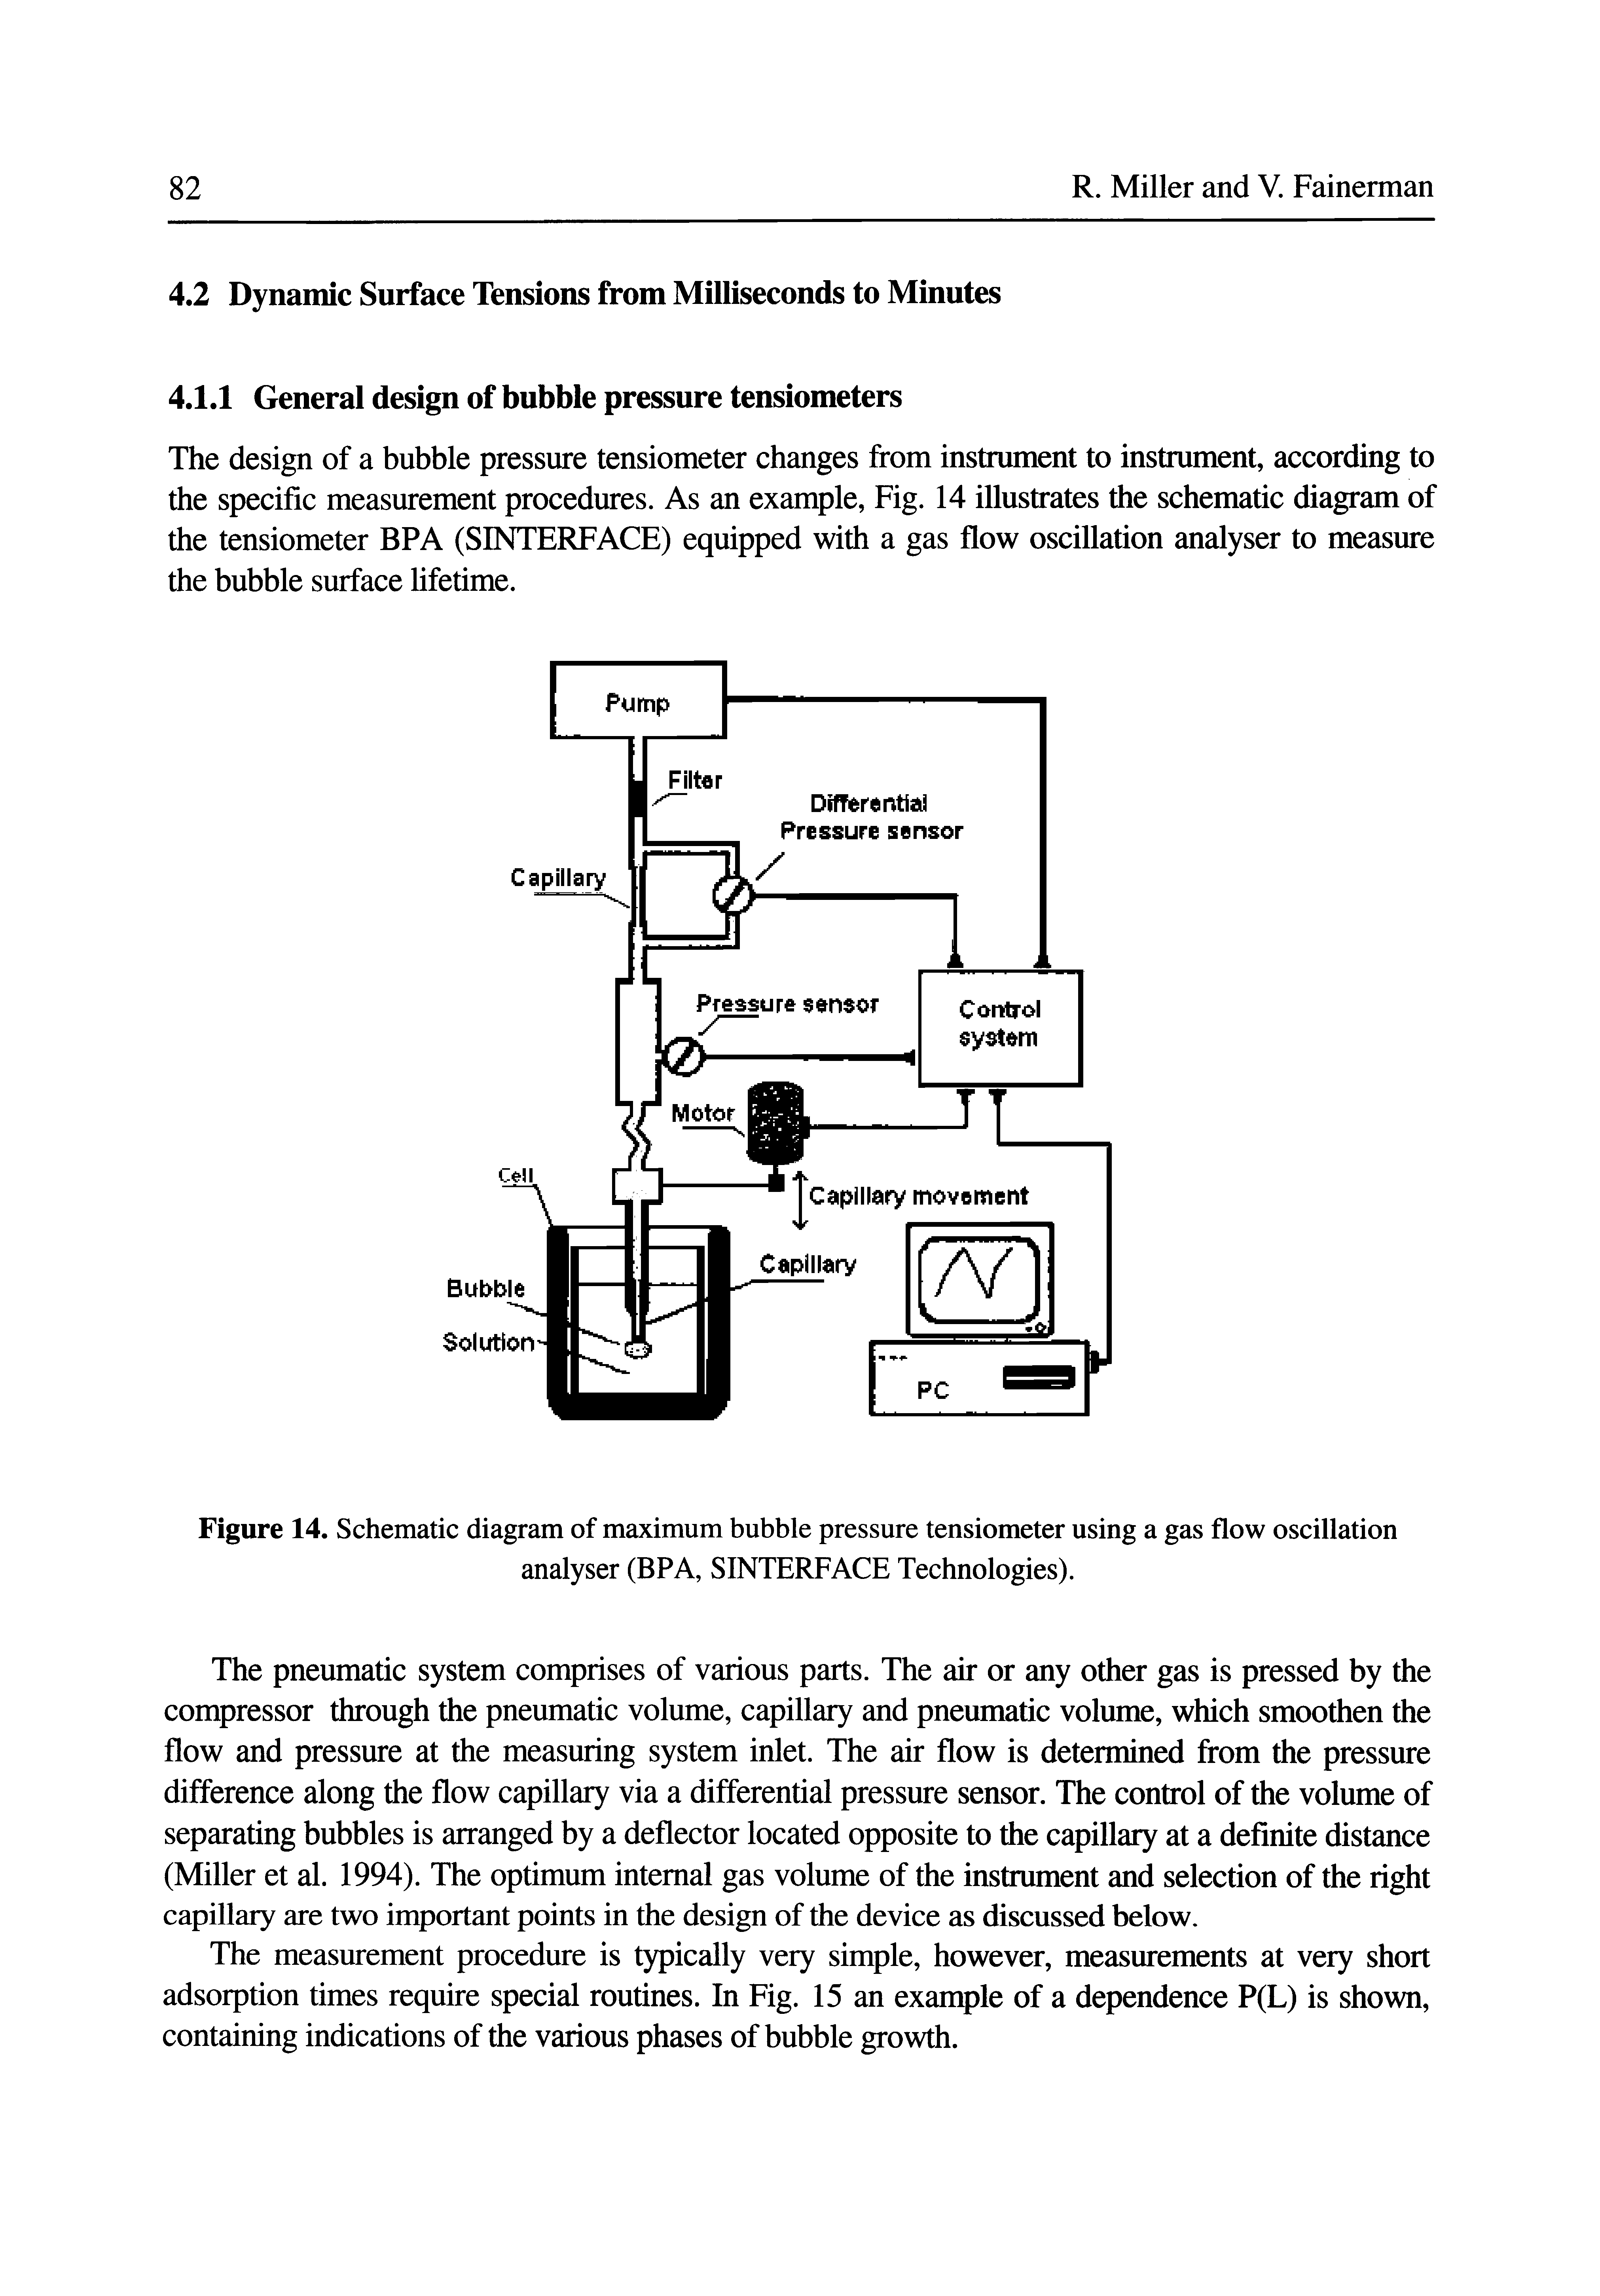 Figure 14. Schematic diagram of maximum bubble pressure tensiometer using a gas flow oscillation analyser (BPA, SINTERFACE Technologies).